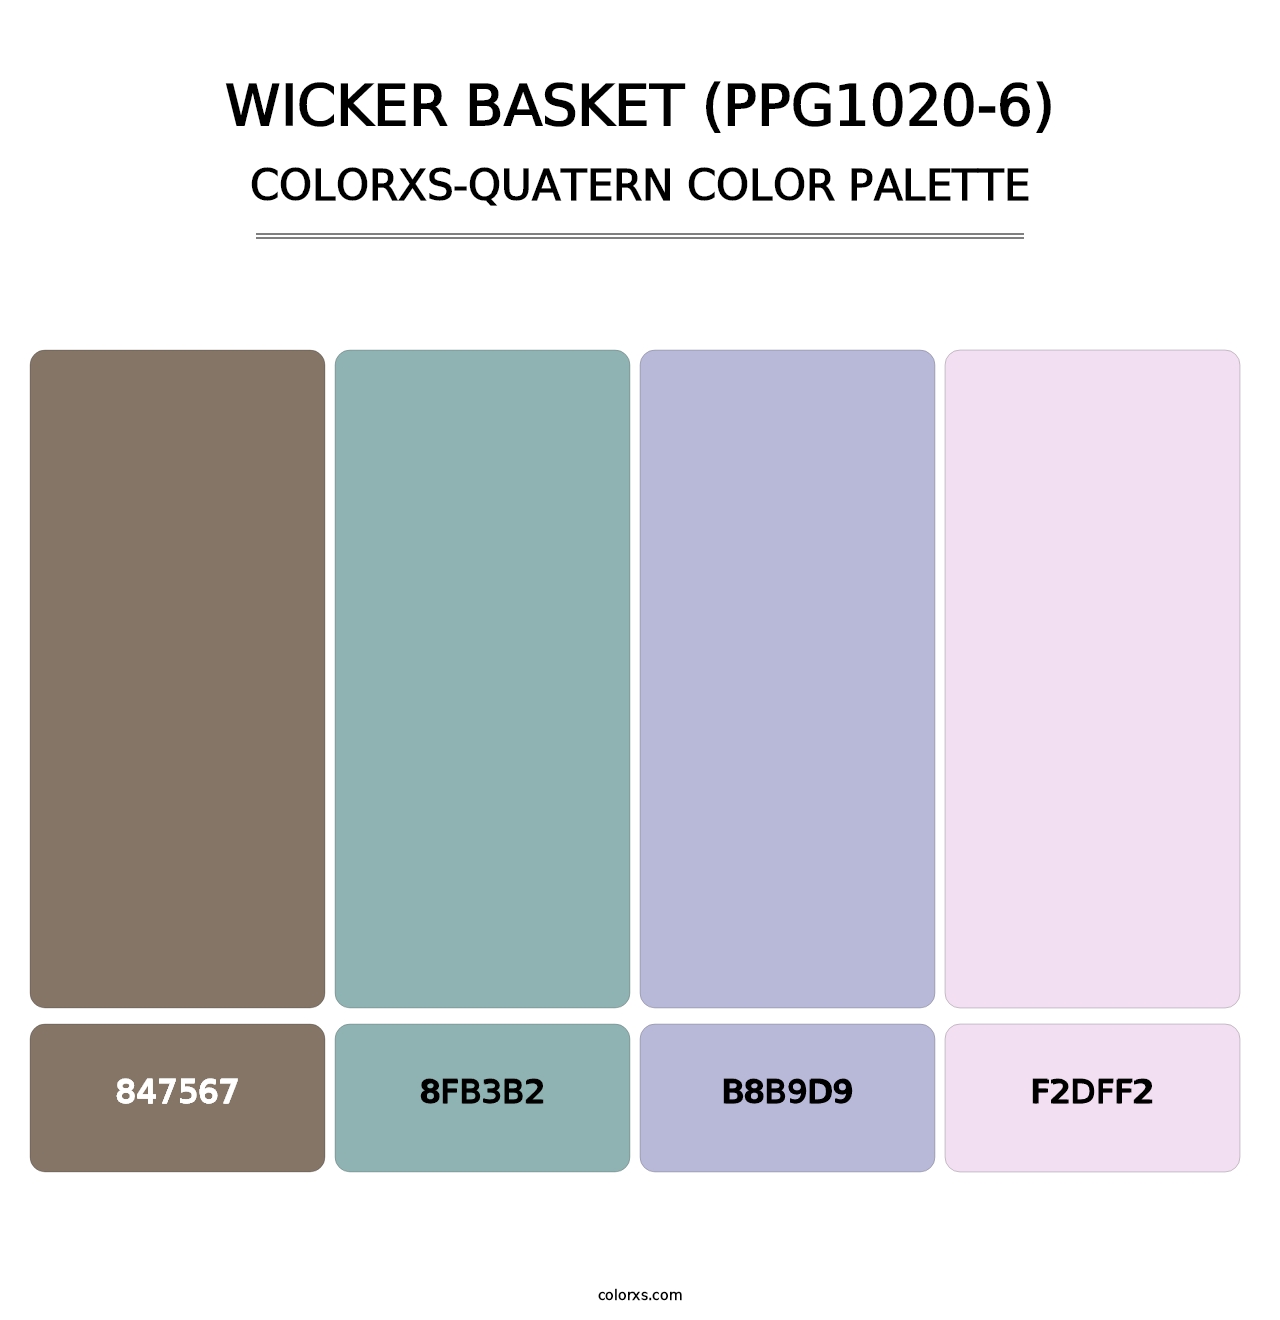 Wicker Basket (PPG1020-6) - Colorxs Quatern Palette